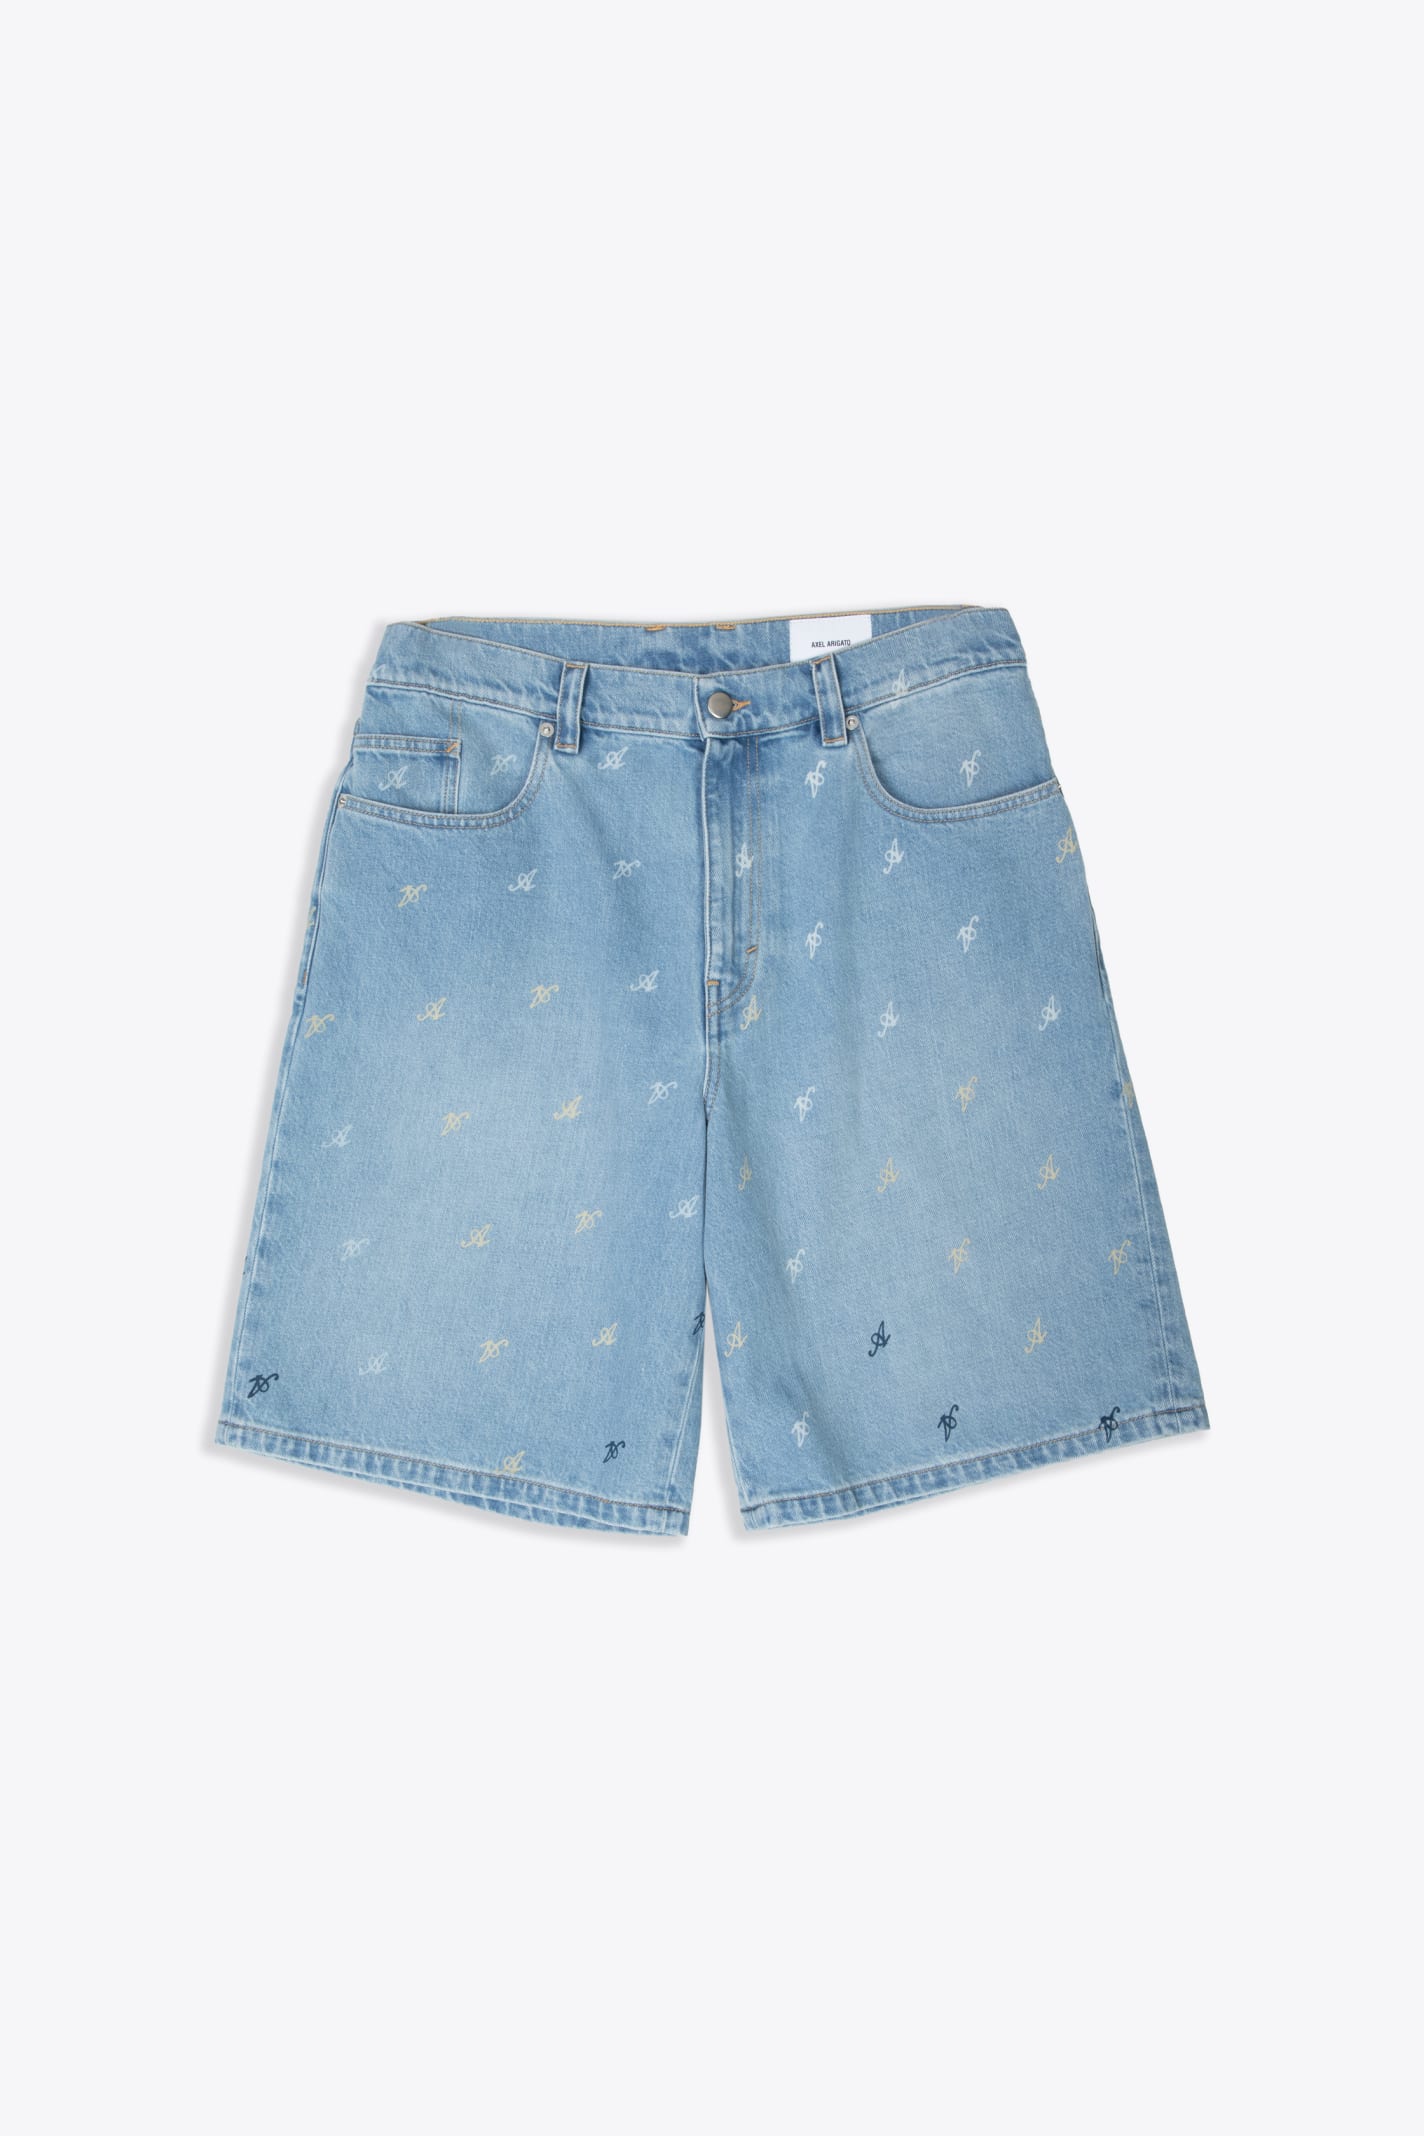 Miles Short Light blue denim shorts with monogram pattern - Miles Shorts